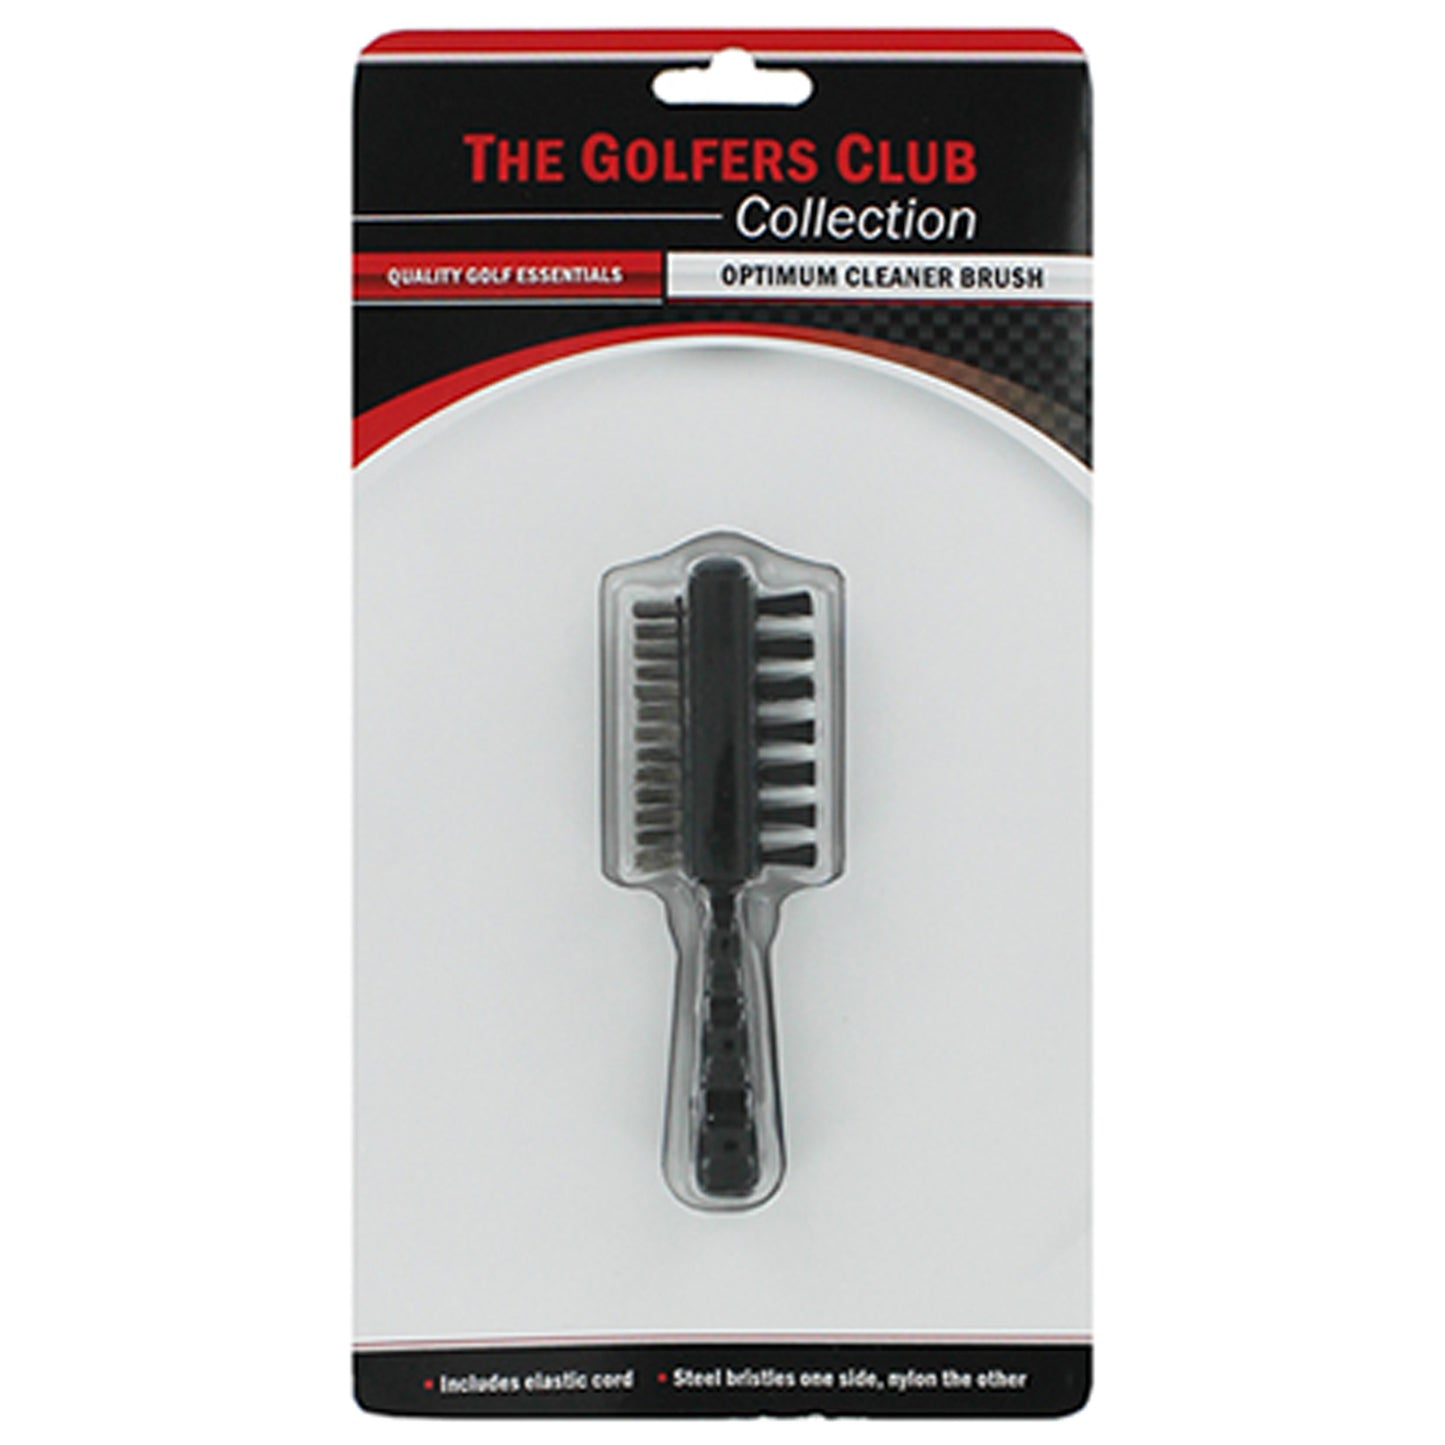 Golfers Club Collection Optimum Cleaner Brush